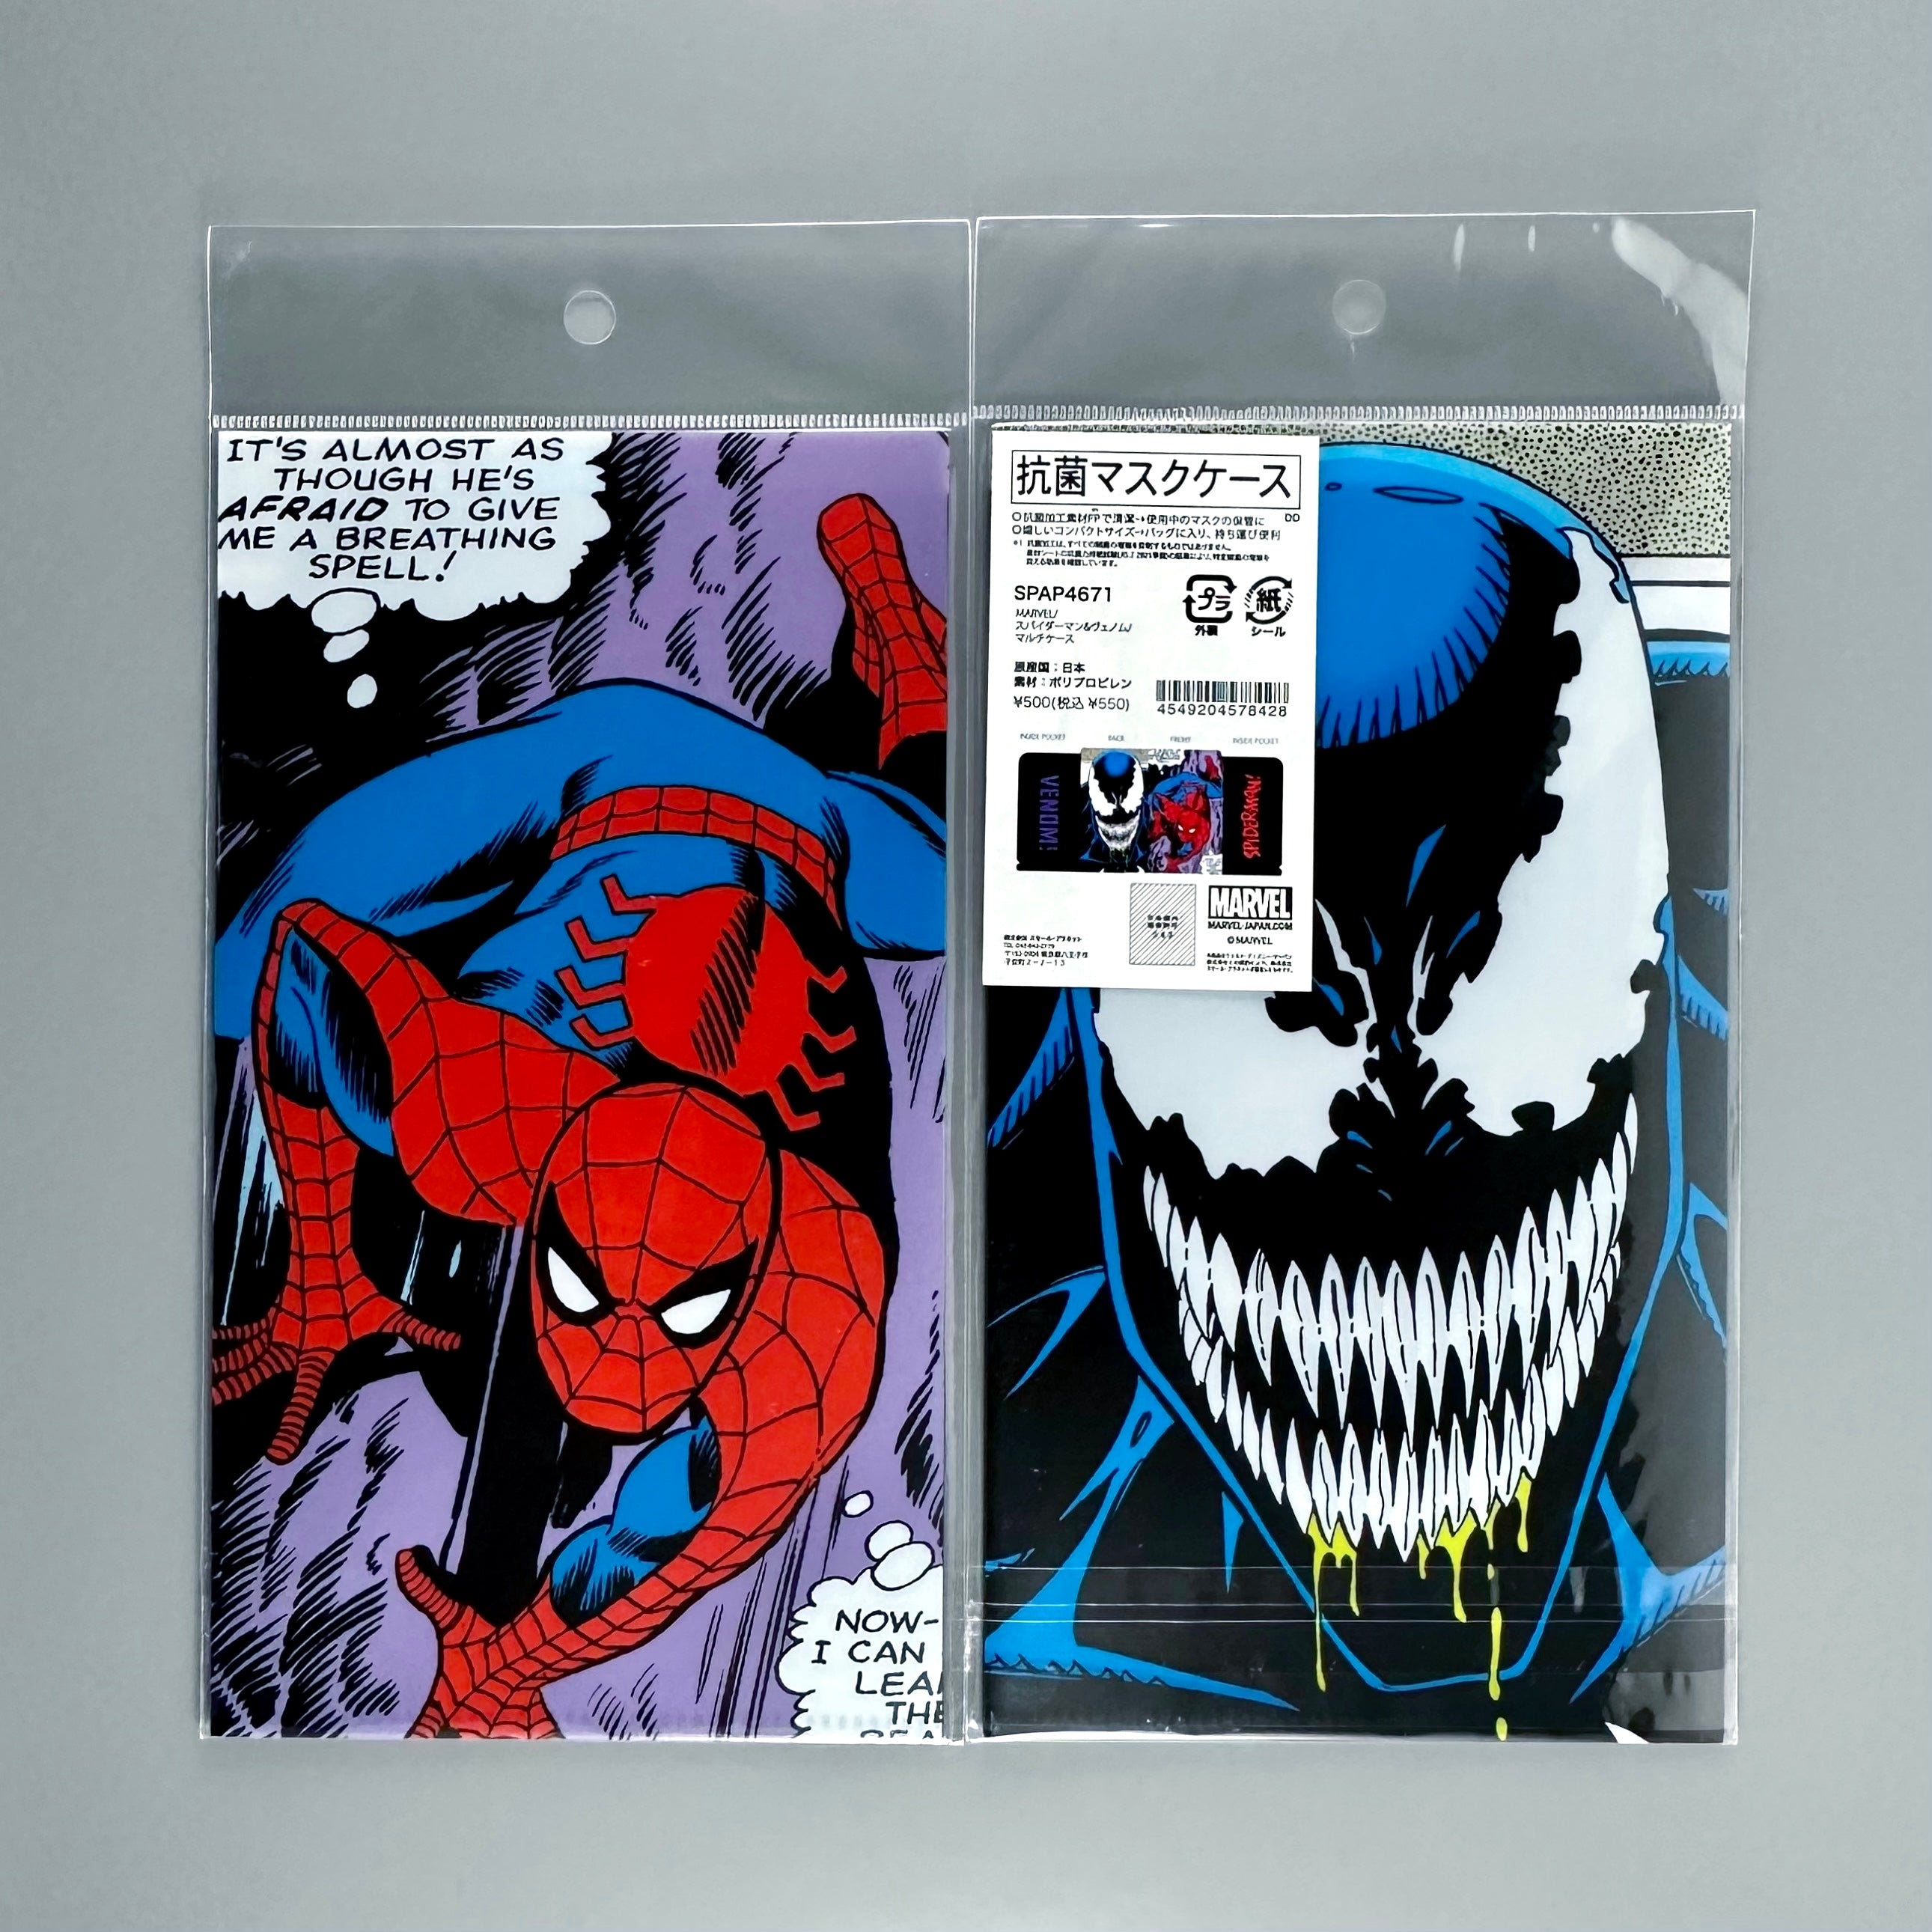 Venom mask (Marvel Comics)